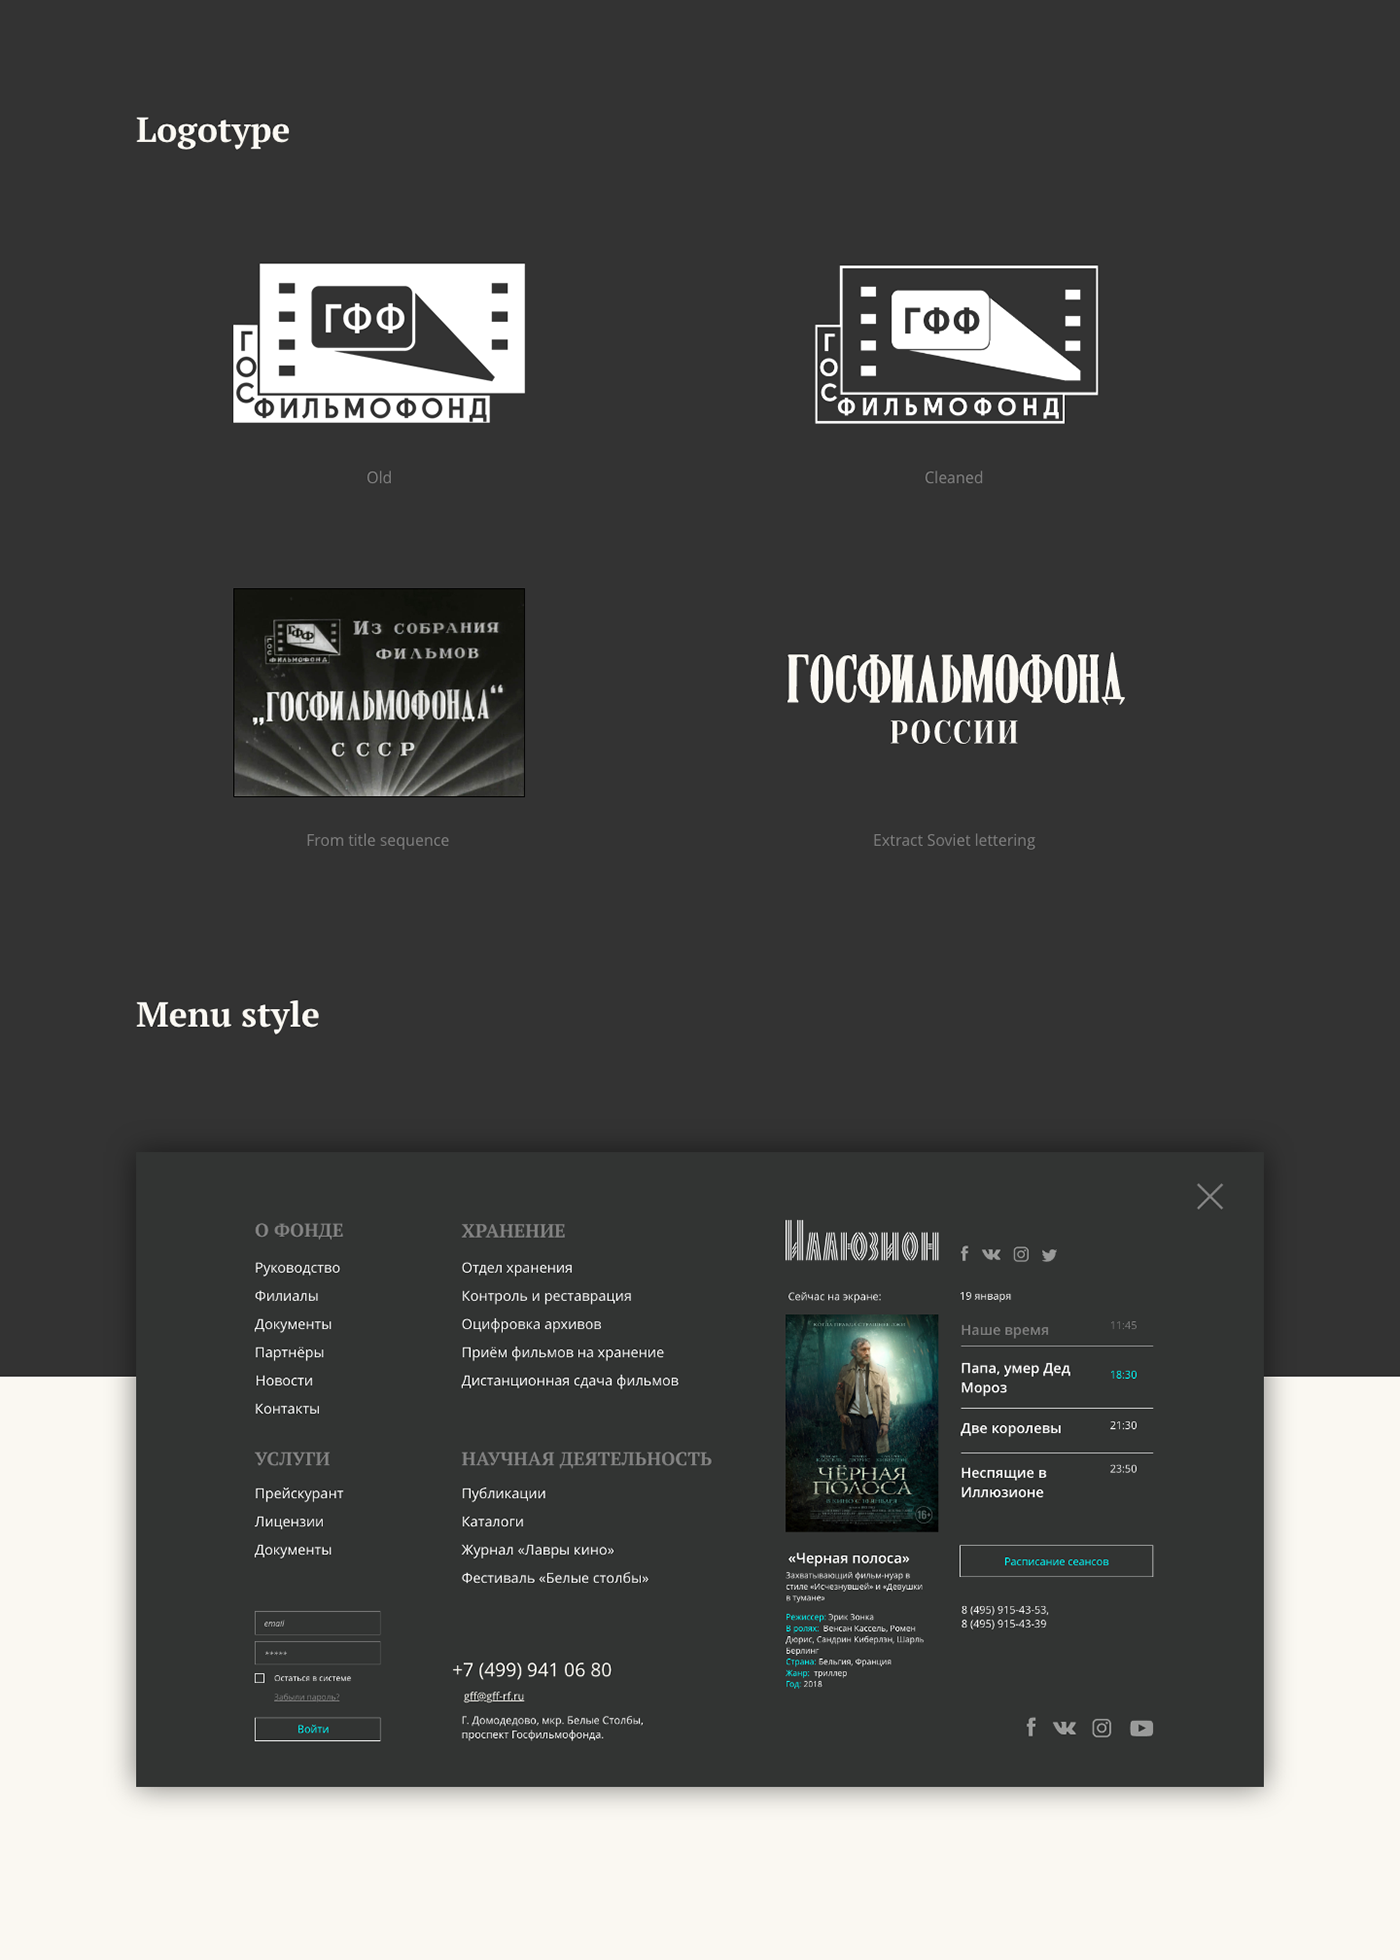 Gosfilmofond Госфильмофонд Website Russia Film Fund Archive movie Cinema